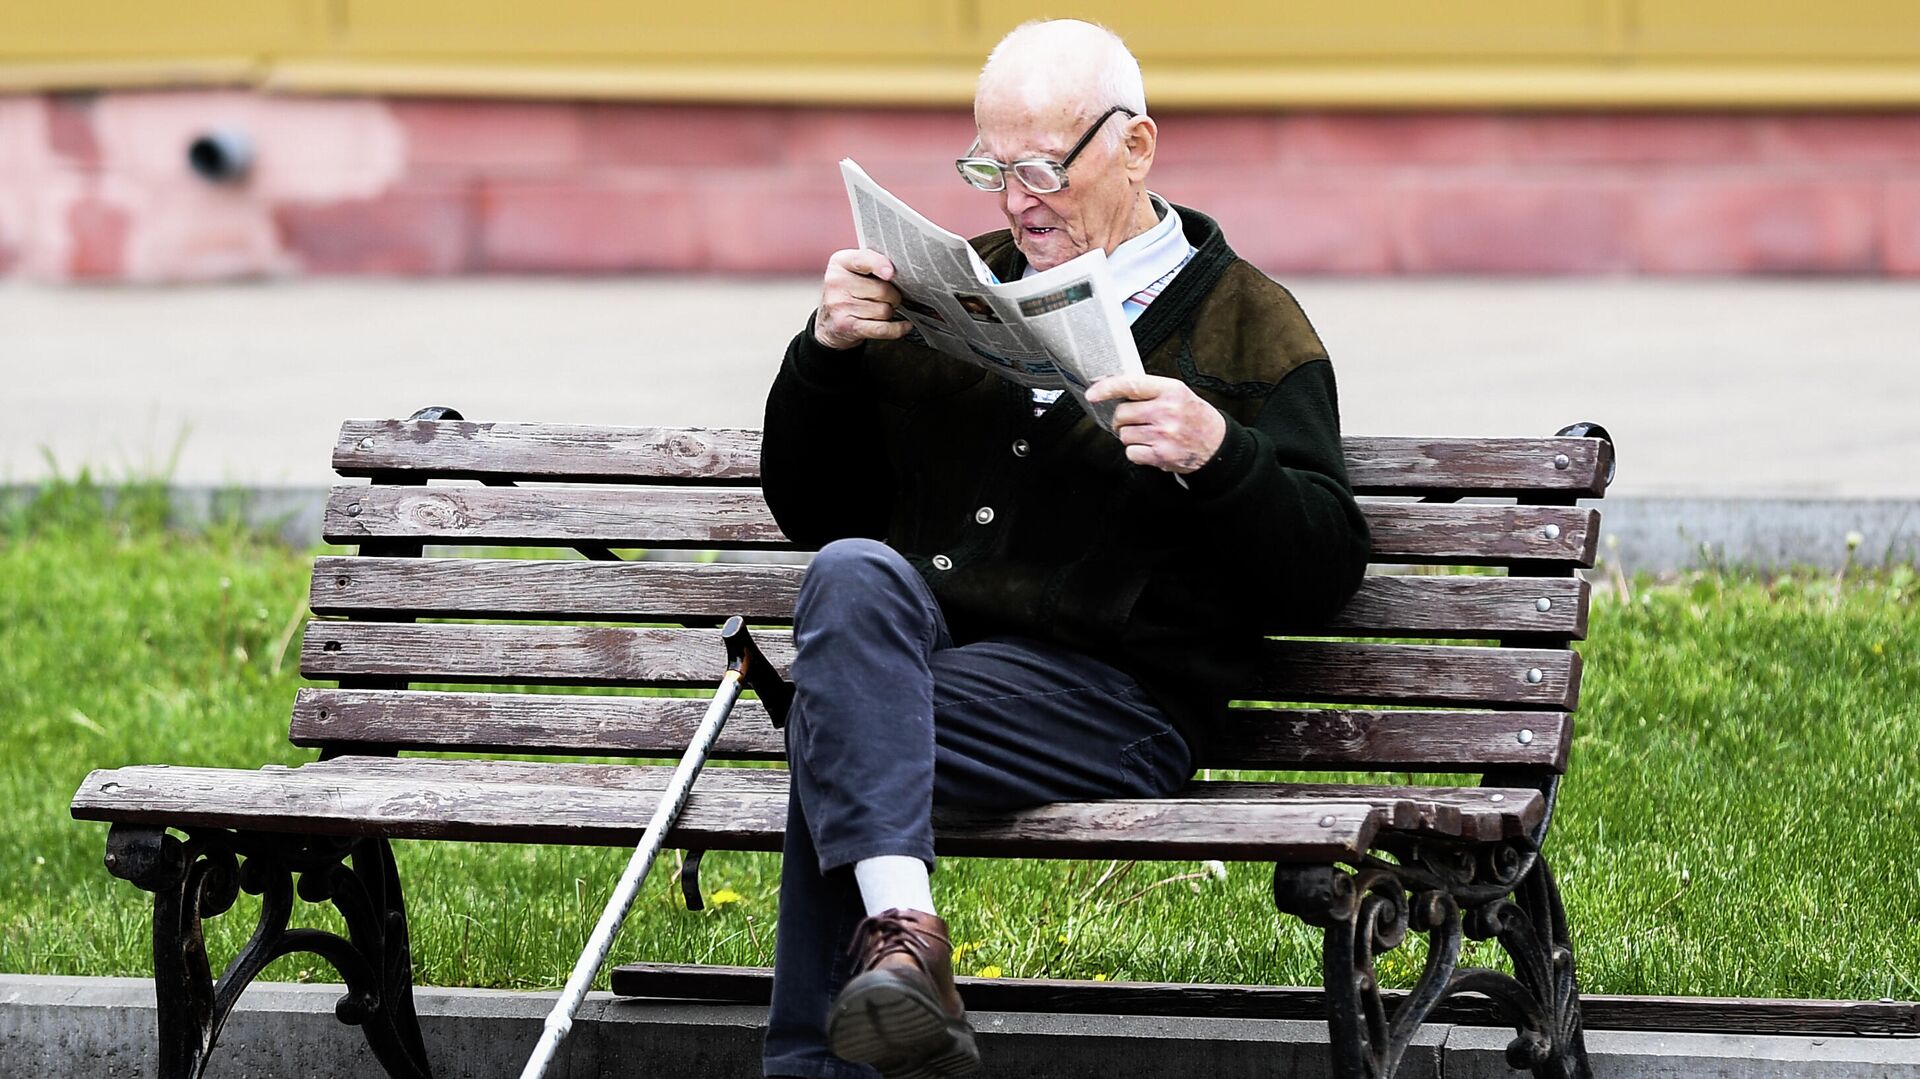 Мужчина читает газету на улице на лавочке в Москве  - РИА Новости, 1920, 07.04.2021